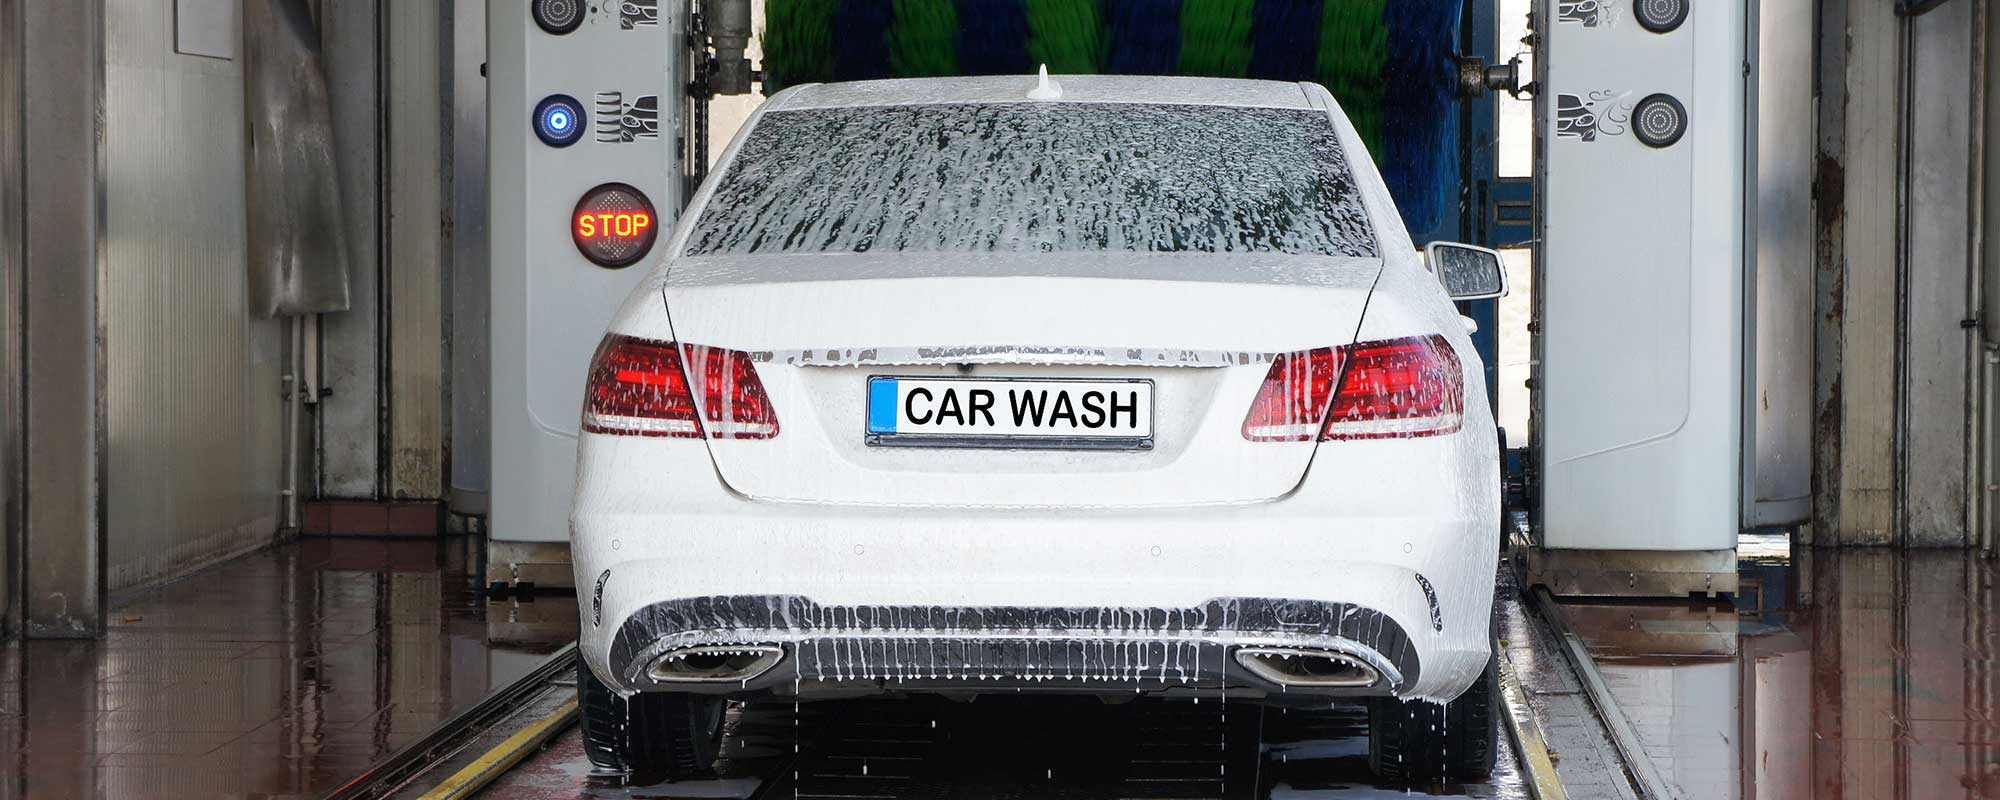 Automobile going through a wash 